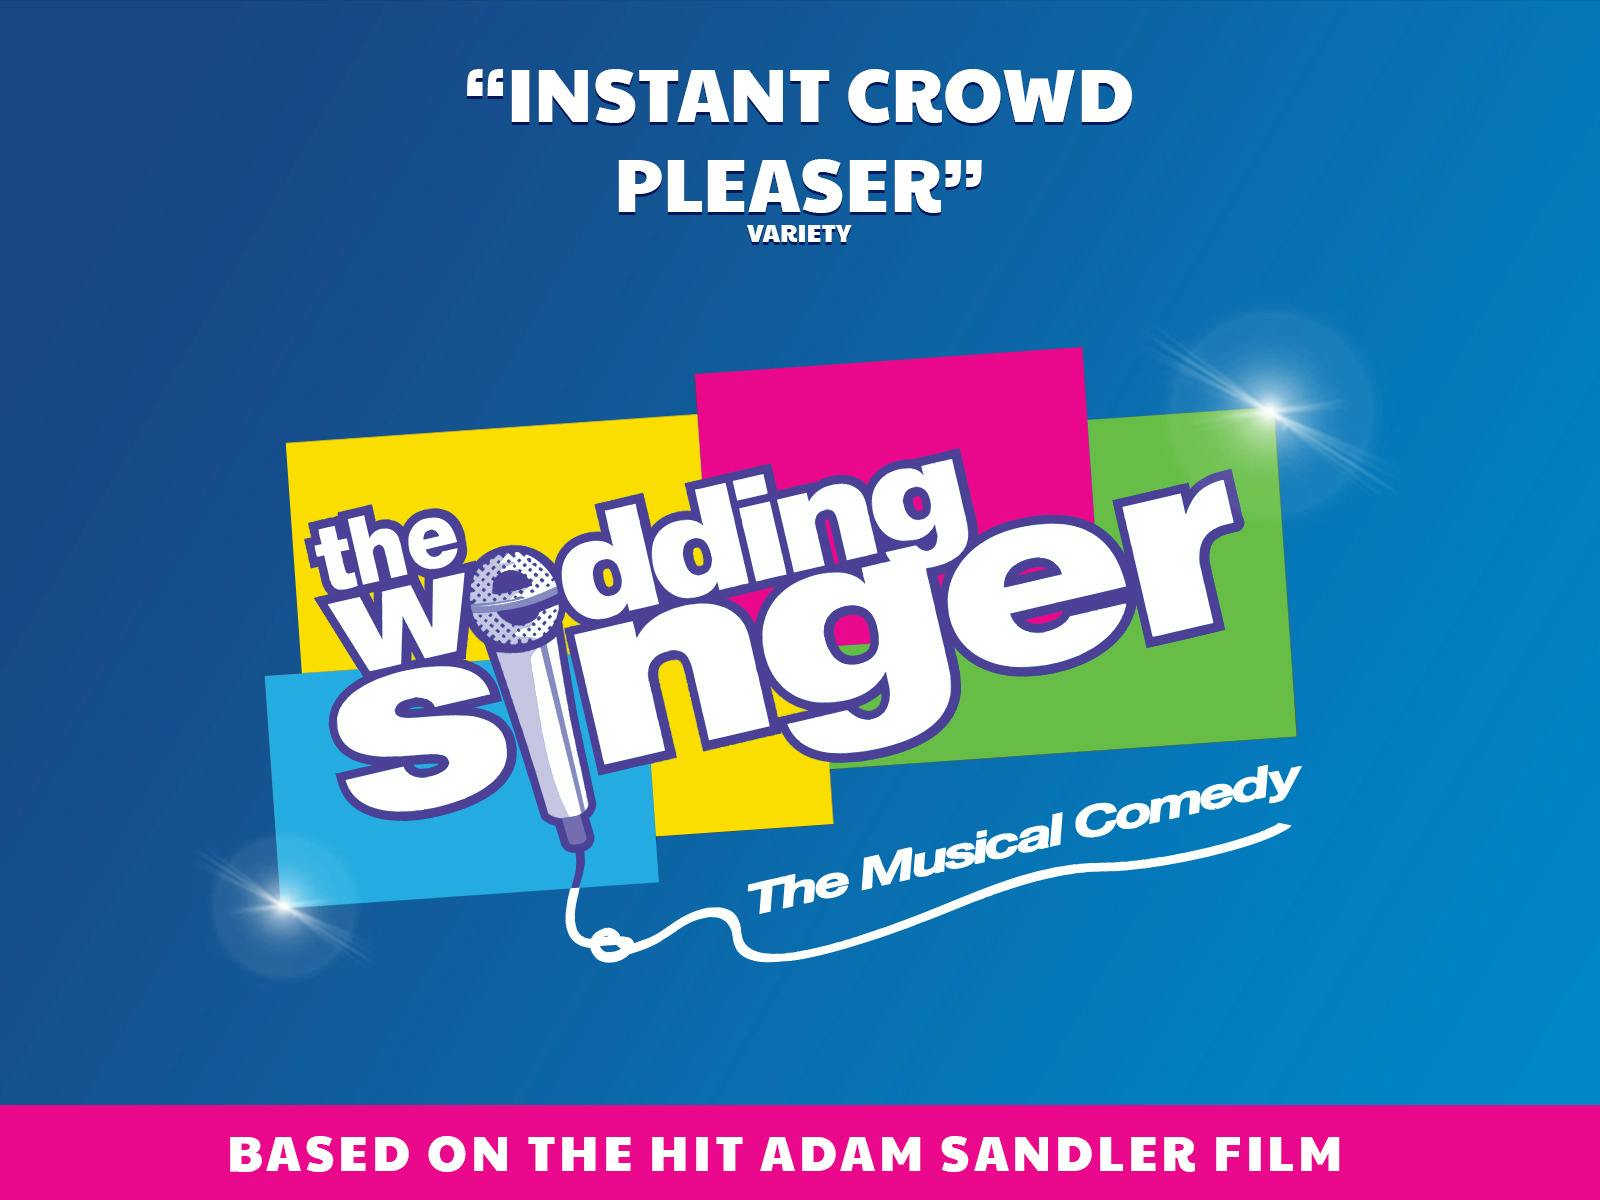 The Wedding Singer Musical Comedy Sydney, Australia